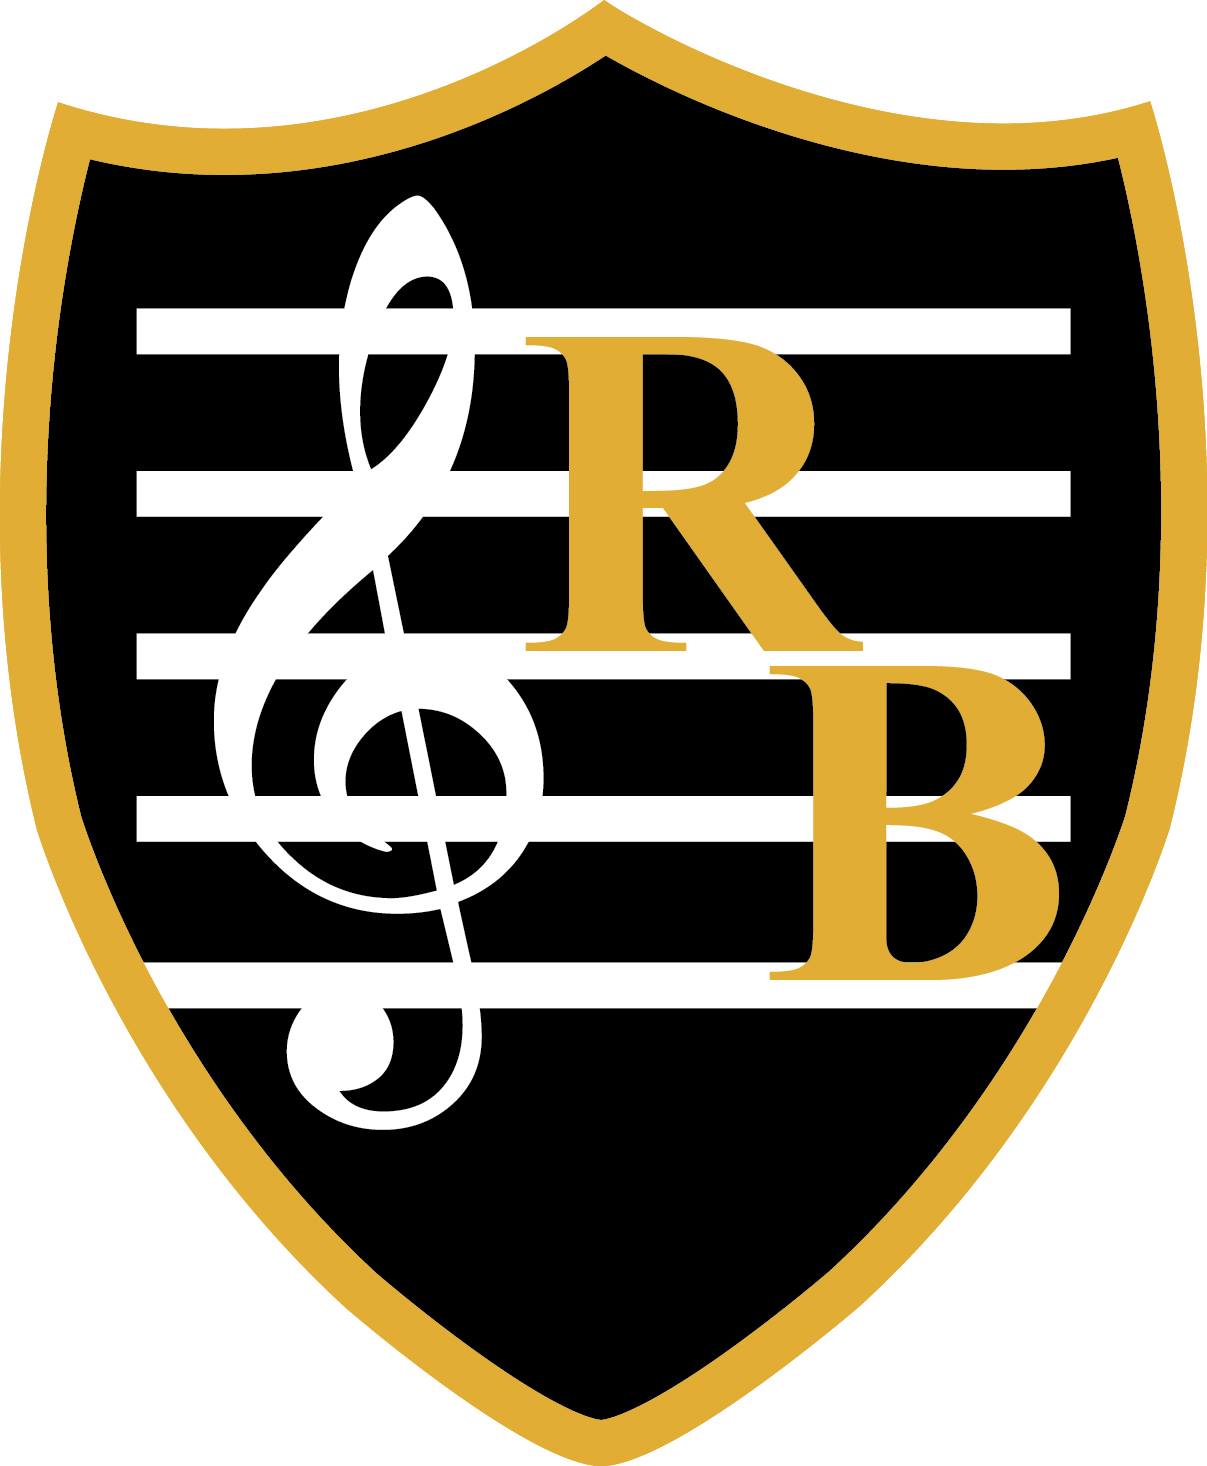 Ringwood and burley band logo